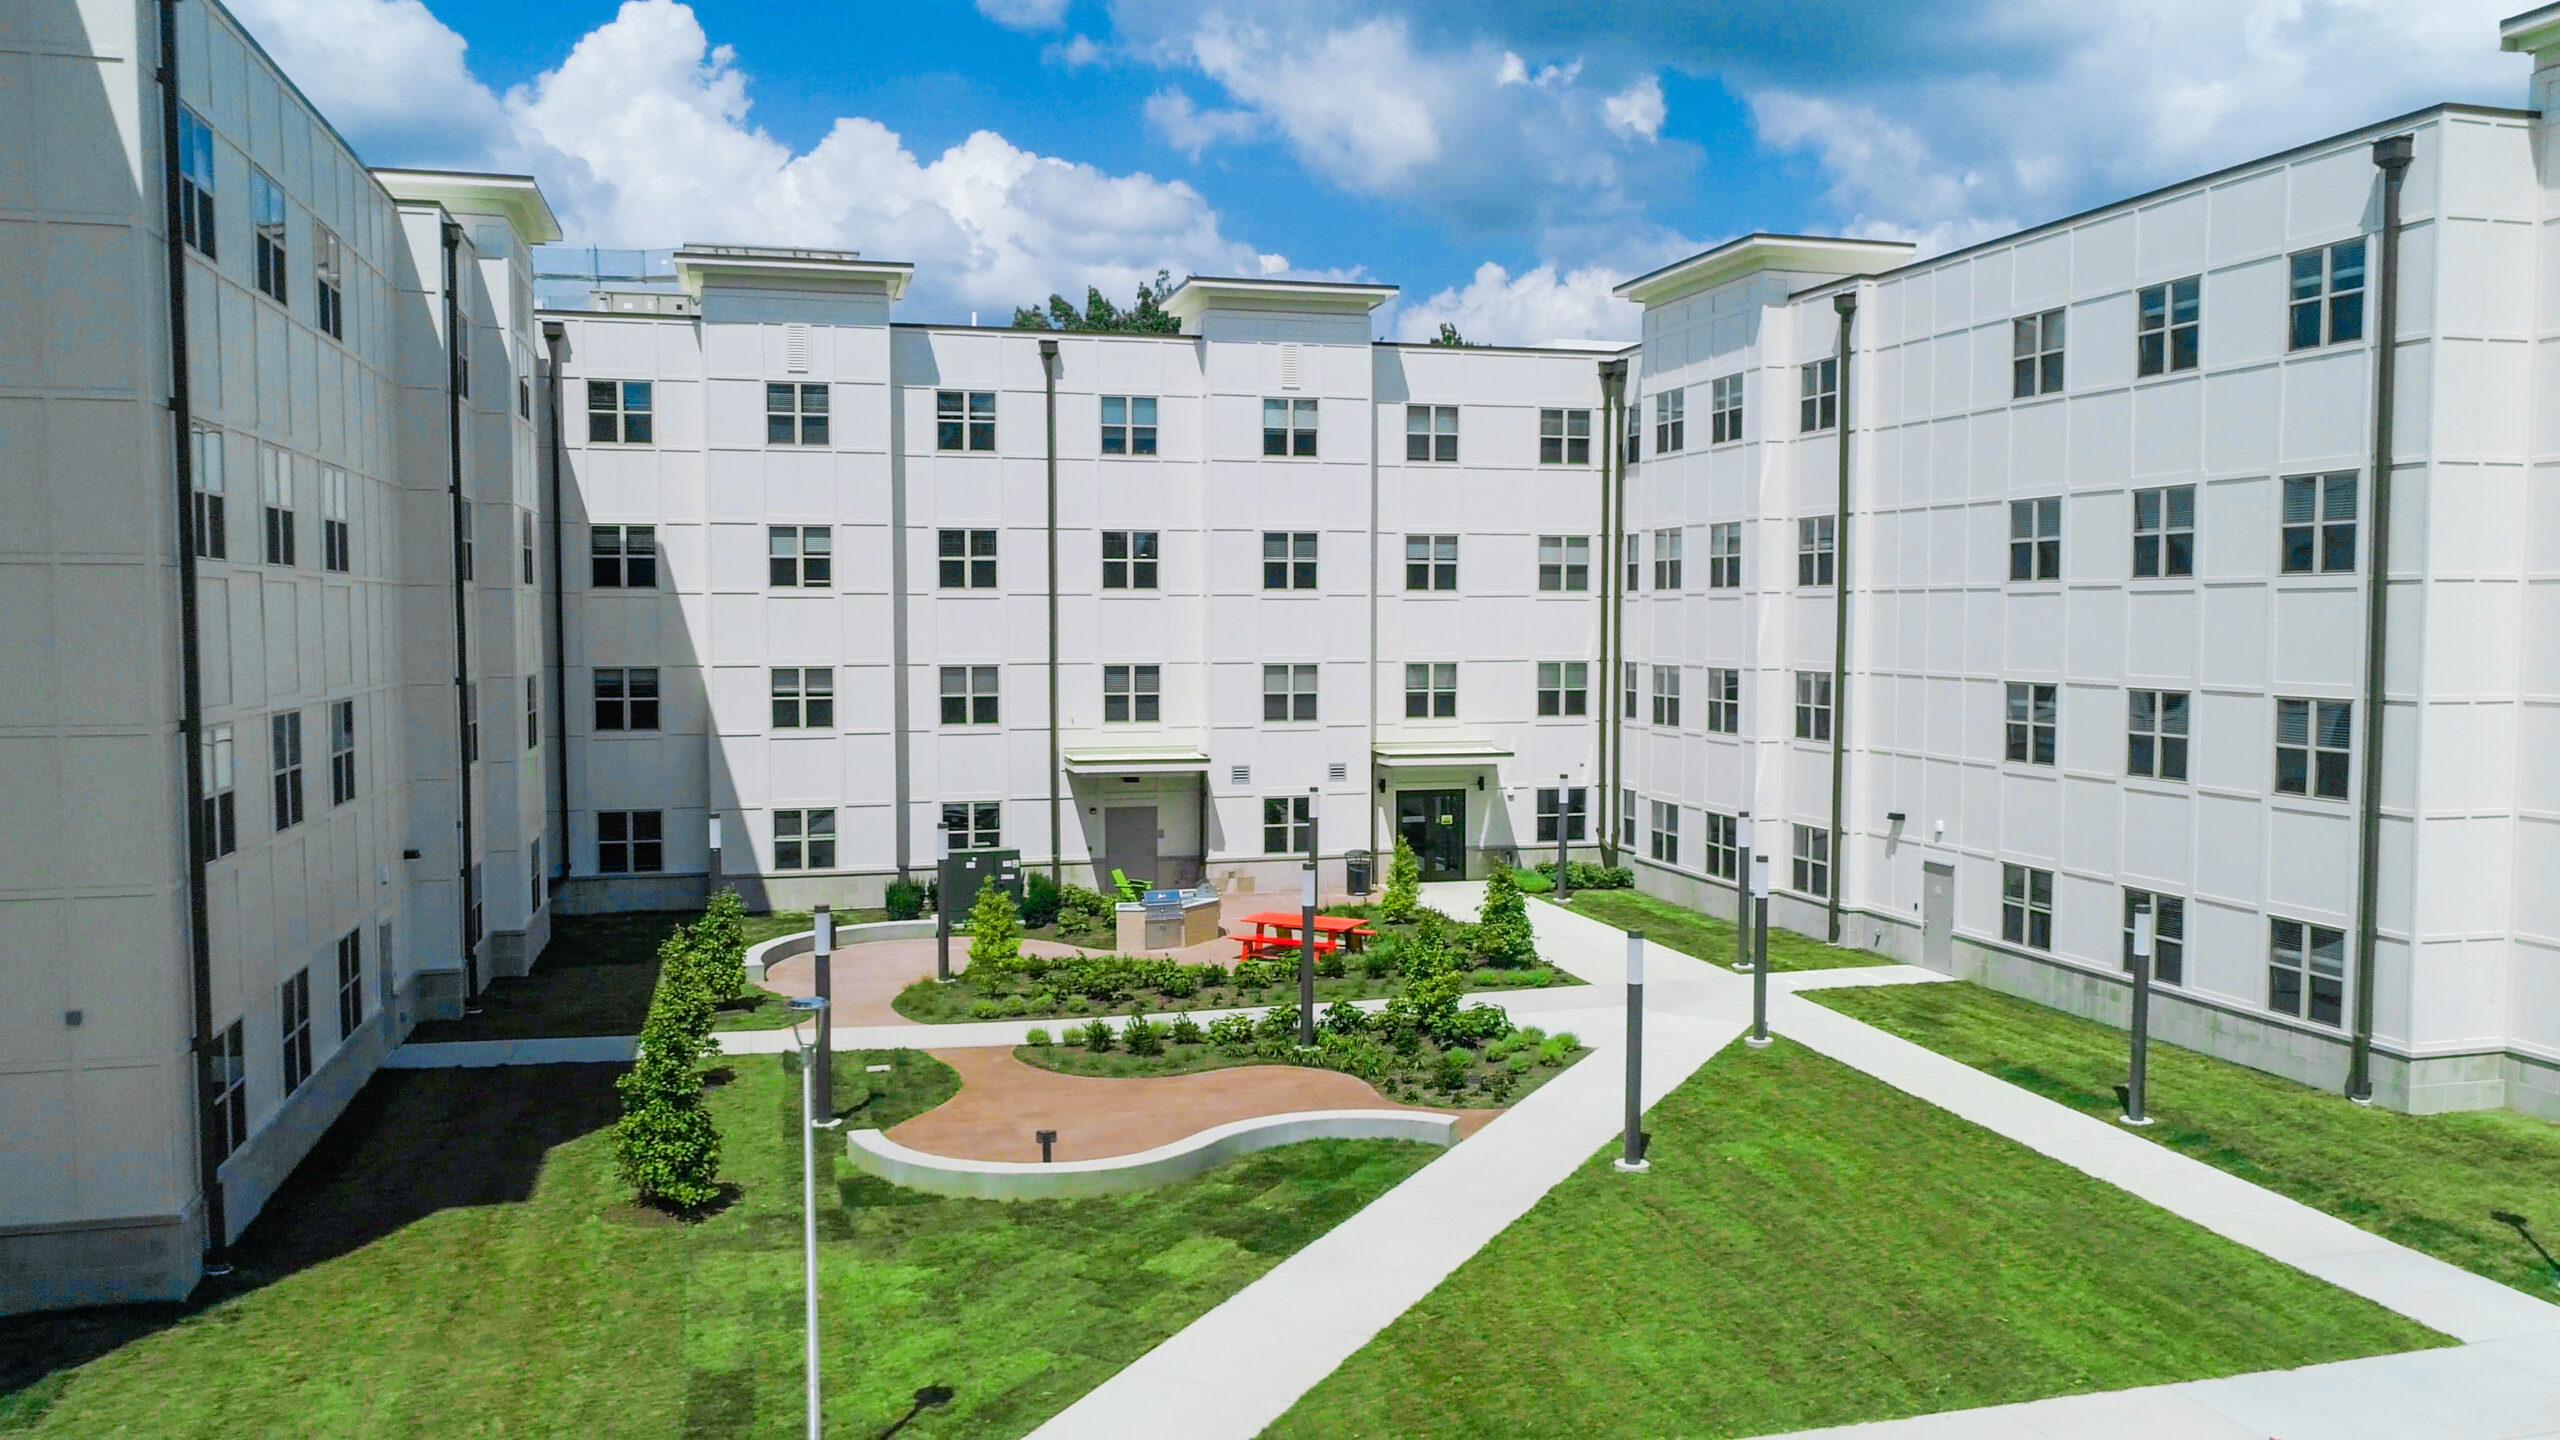 University of Evansville Freshman / Sophomore Student Housing